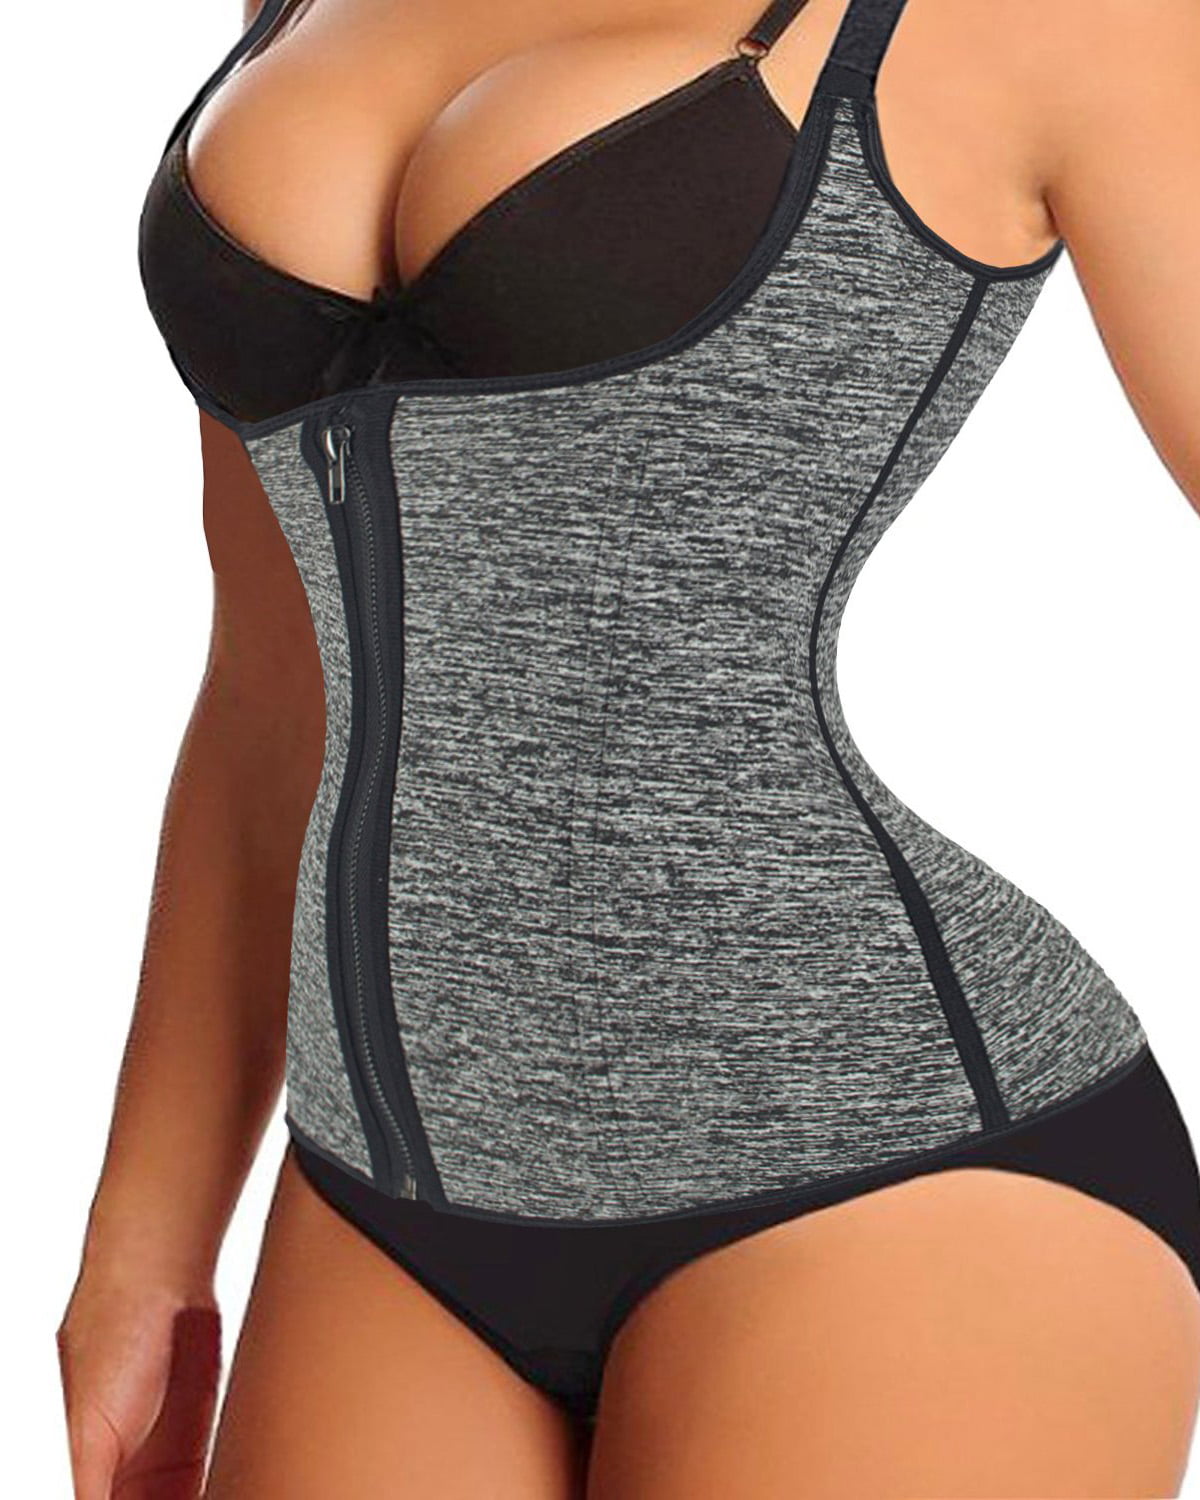 Dainzusyful Sweat Vest Waist Trainer for Women Weight Loss Sauna Slimming Vest Adjustable Body Shaper Trimmer Belt 